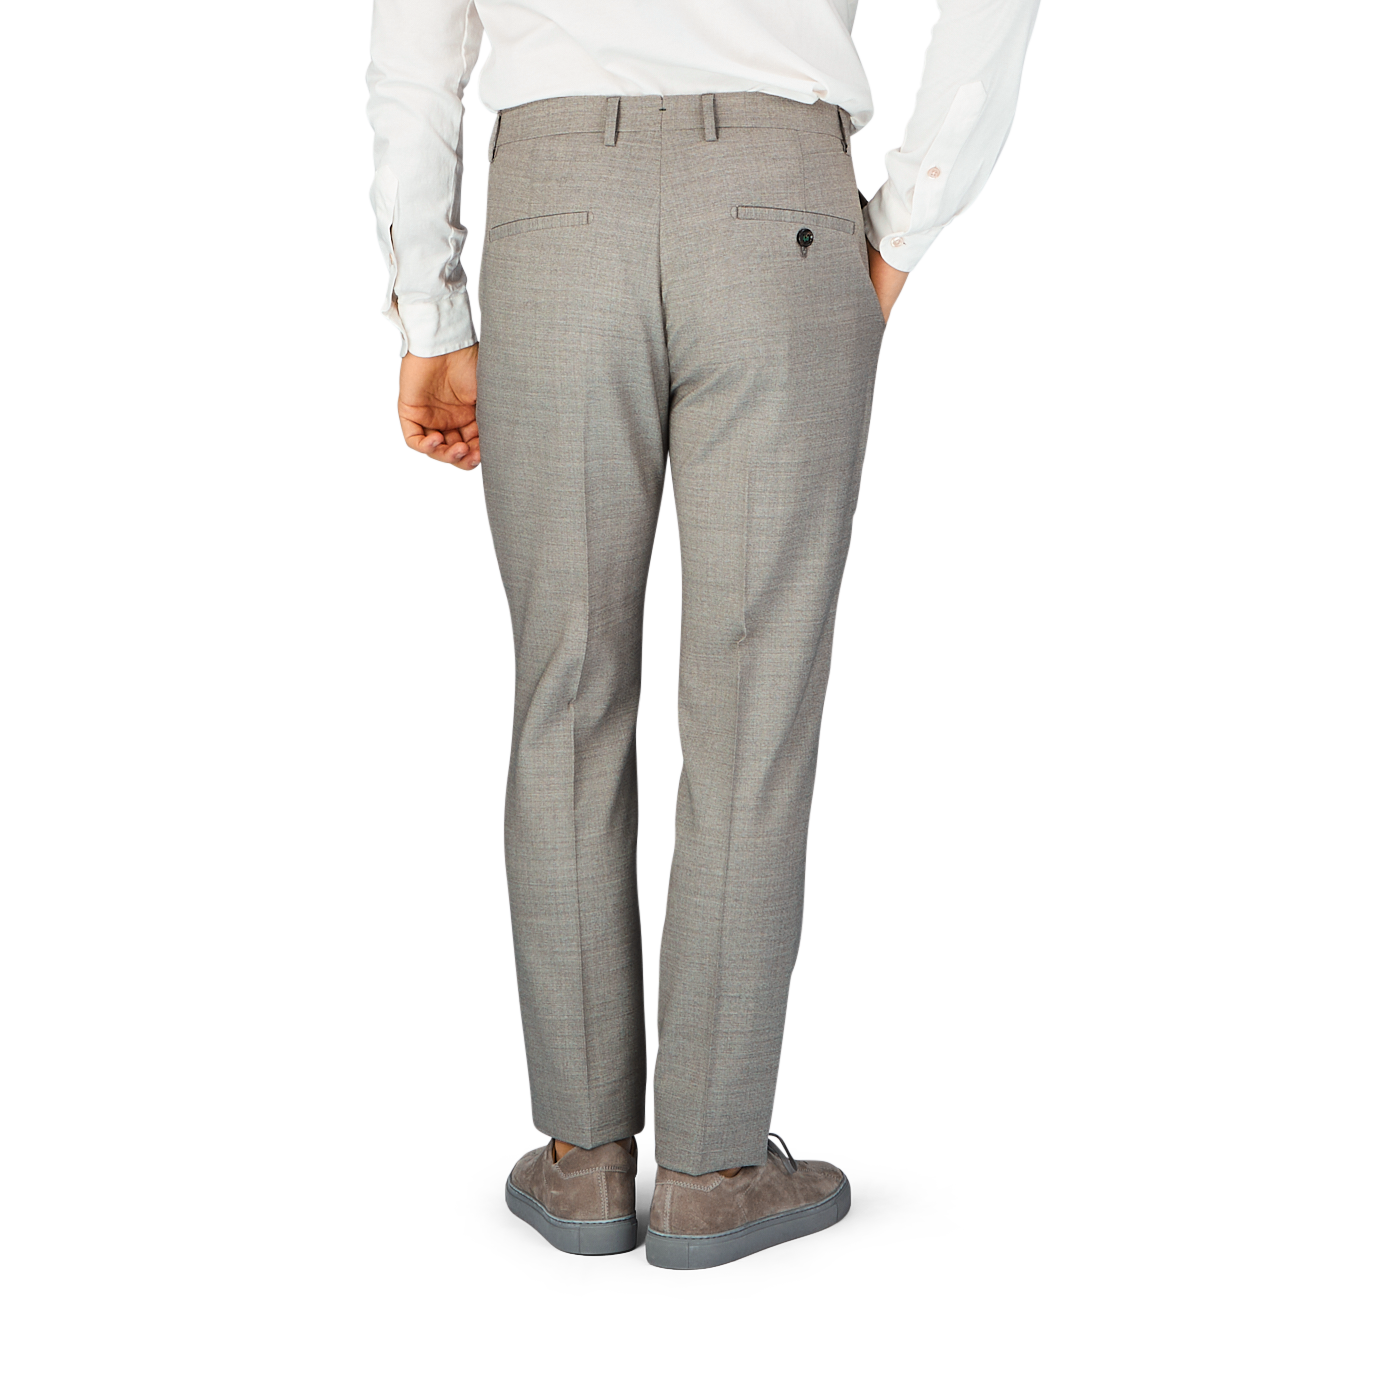 The back view of a man wearing Berwich's Grey Beige Wool Fresco Flat Front Trousers suit.